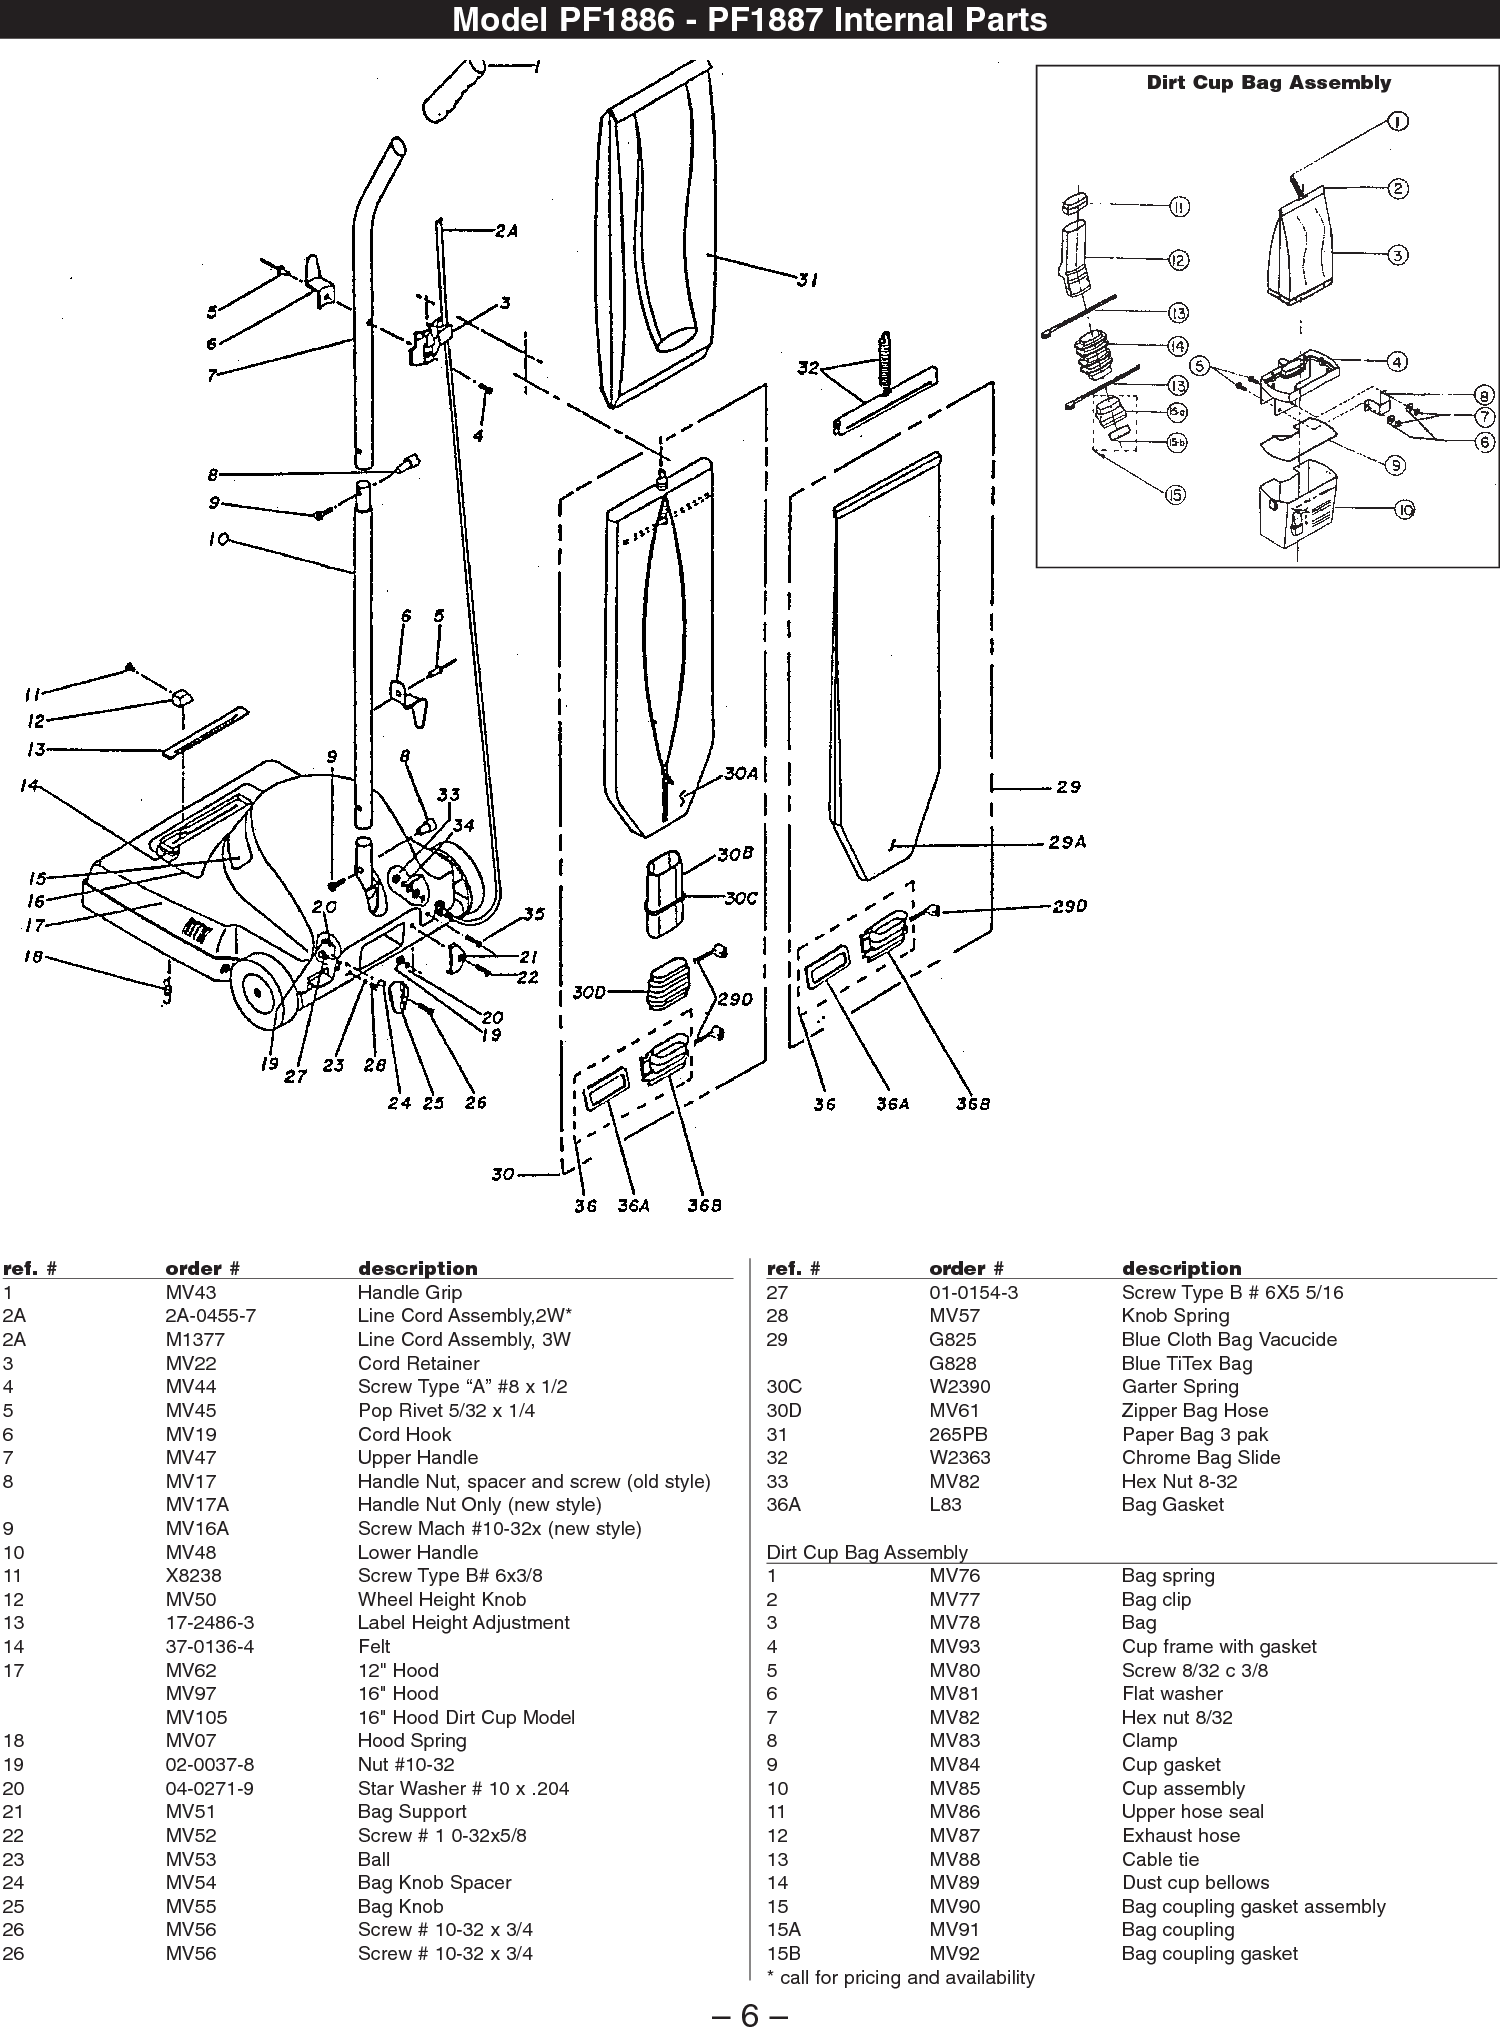 Page 6 of 8 - Sweepscrub Powr-Flite-Pf1886-1887-Vacuum-Operators-Manual User Manual